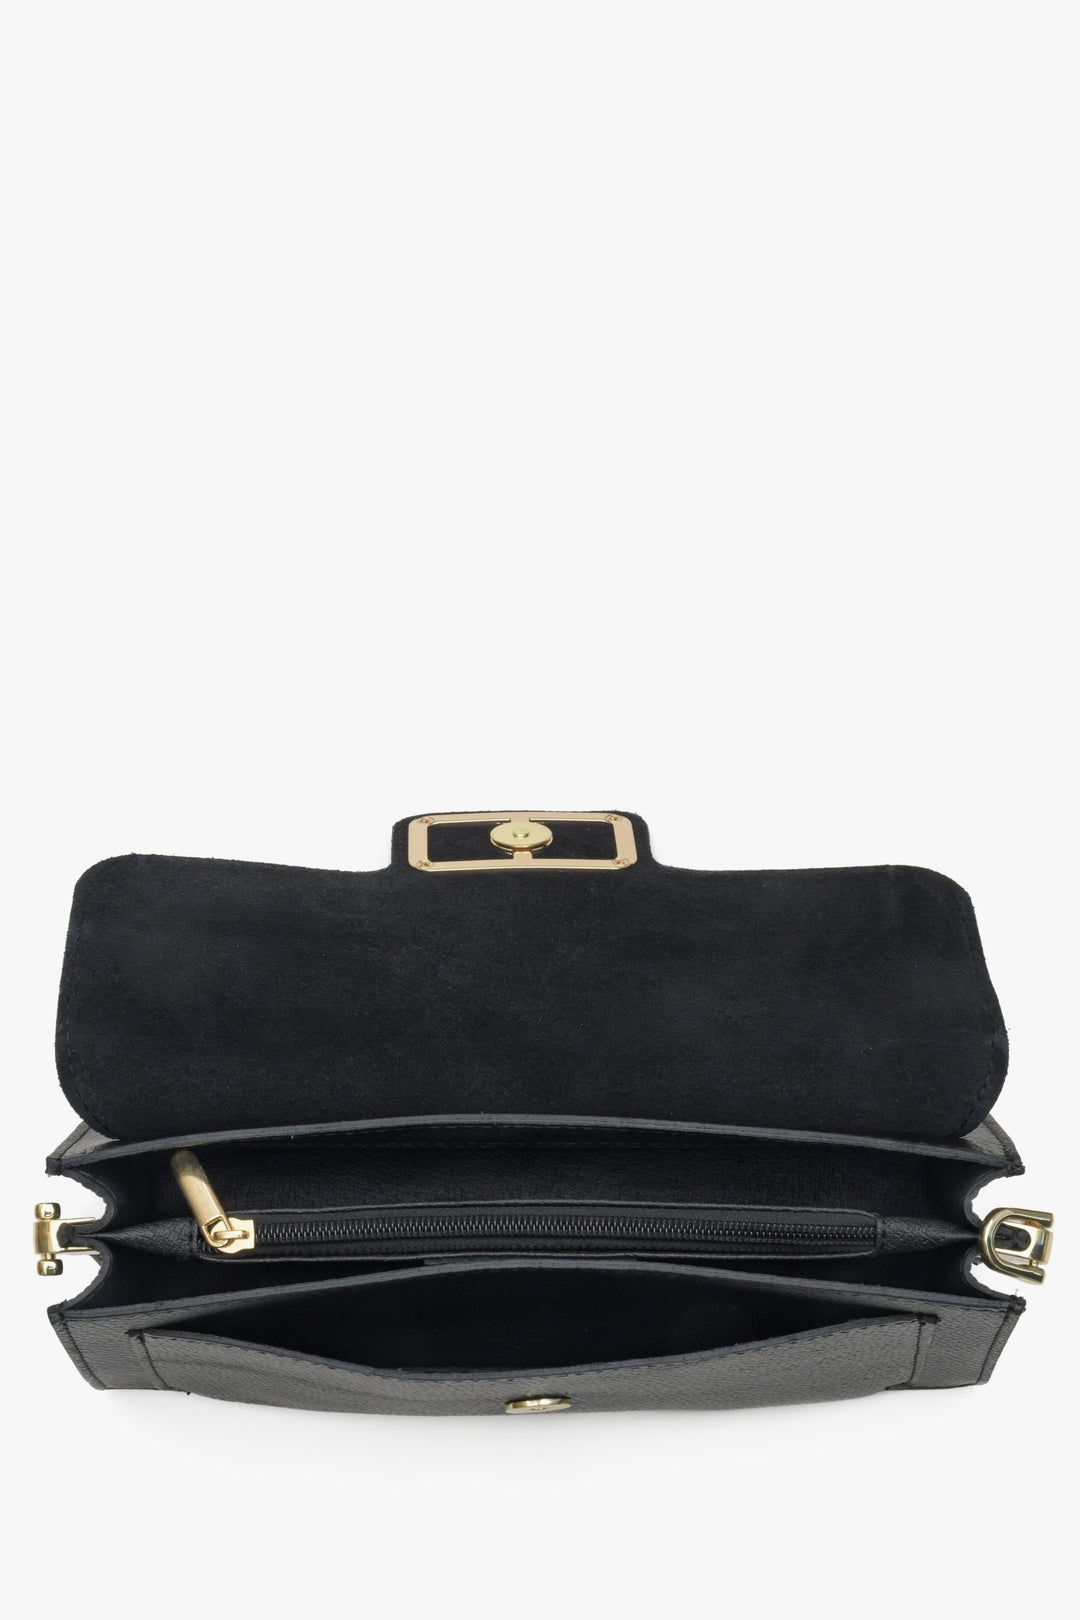 Estro women's black  practical handbag made of Italian genuine leather - close-up on the interior of the model.